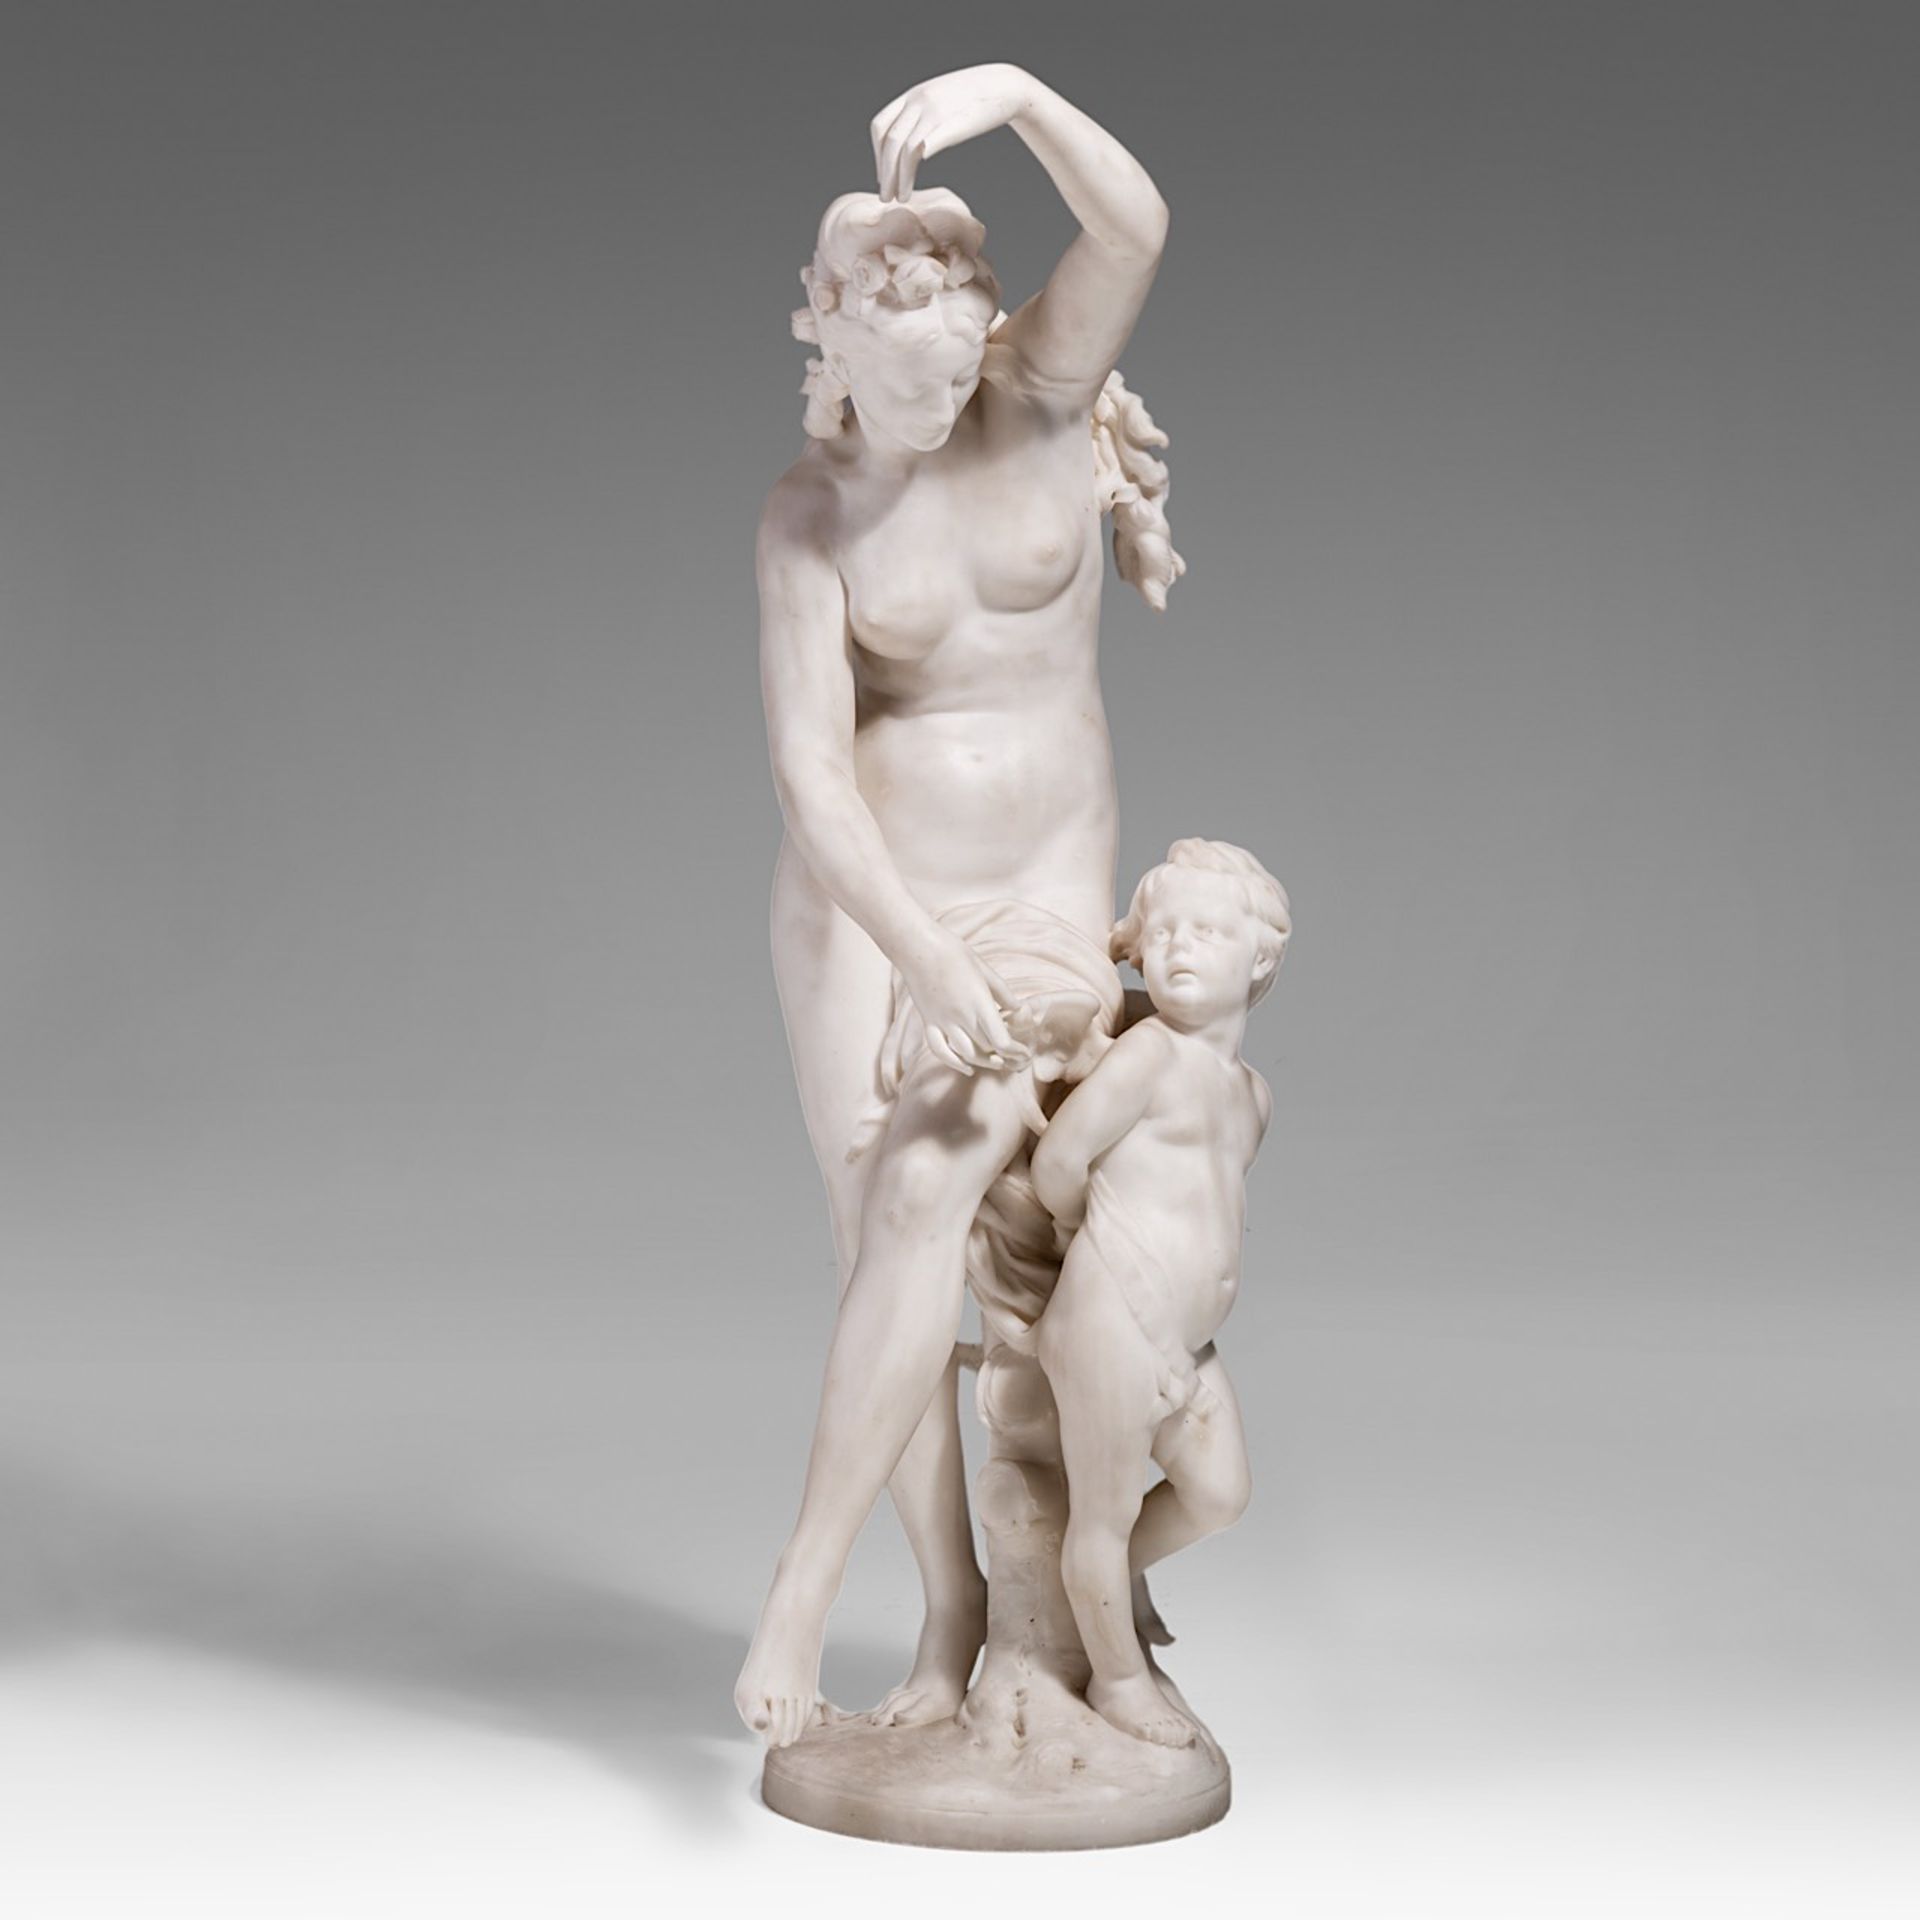 Emile Andre Boisseau (1842-1923), Venus and Amor, Carrara marble, H 99,5 cm